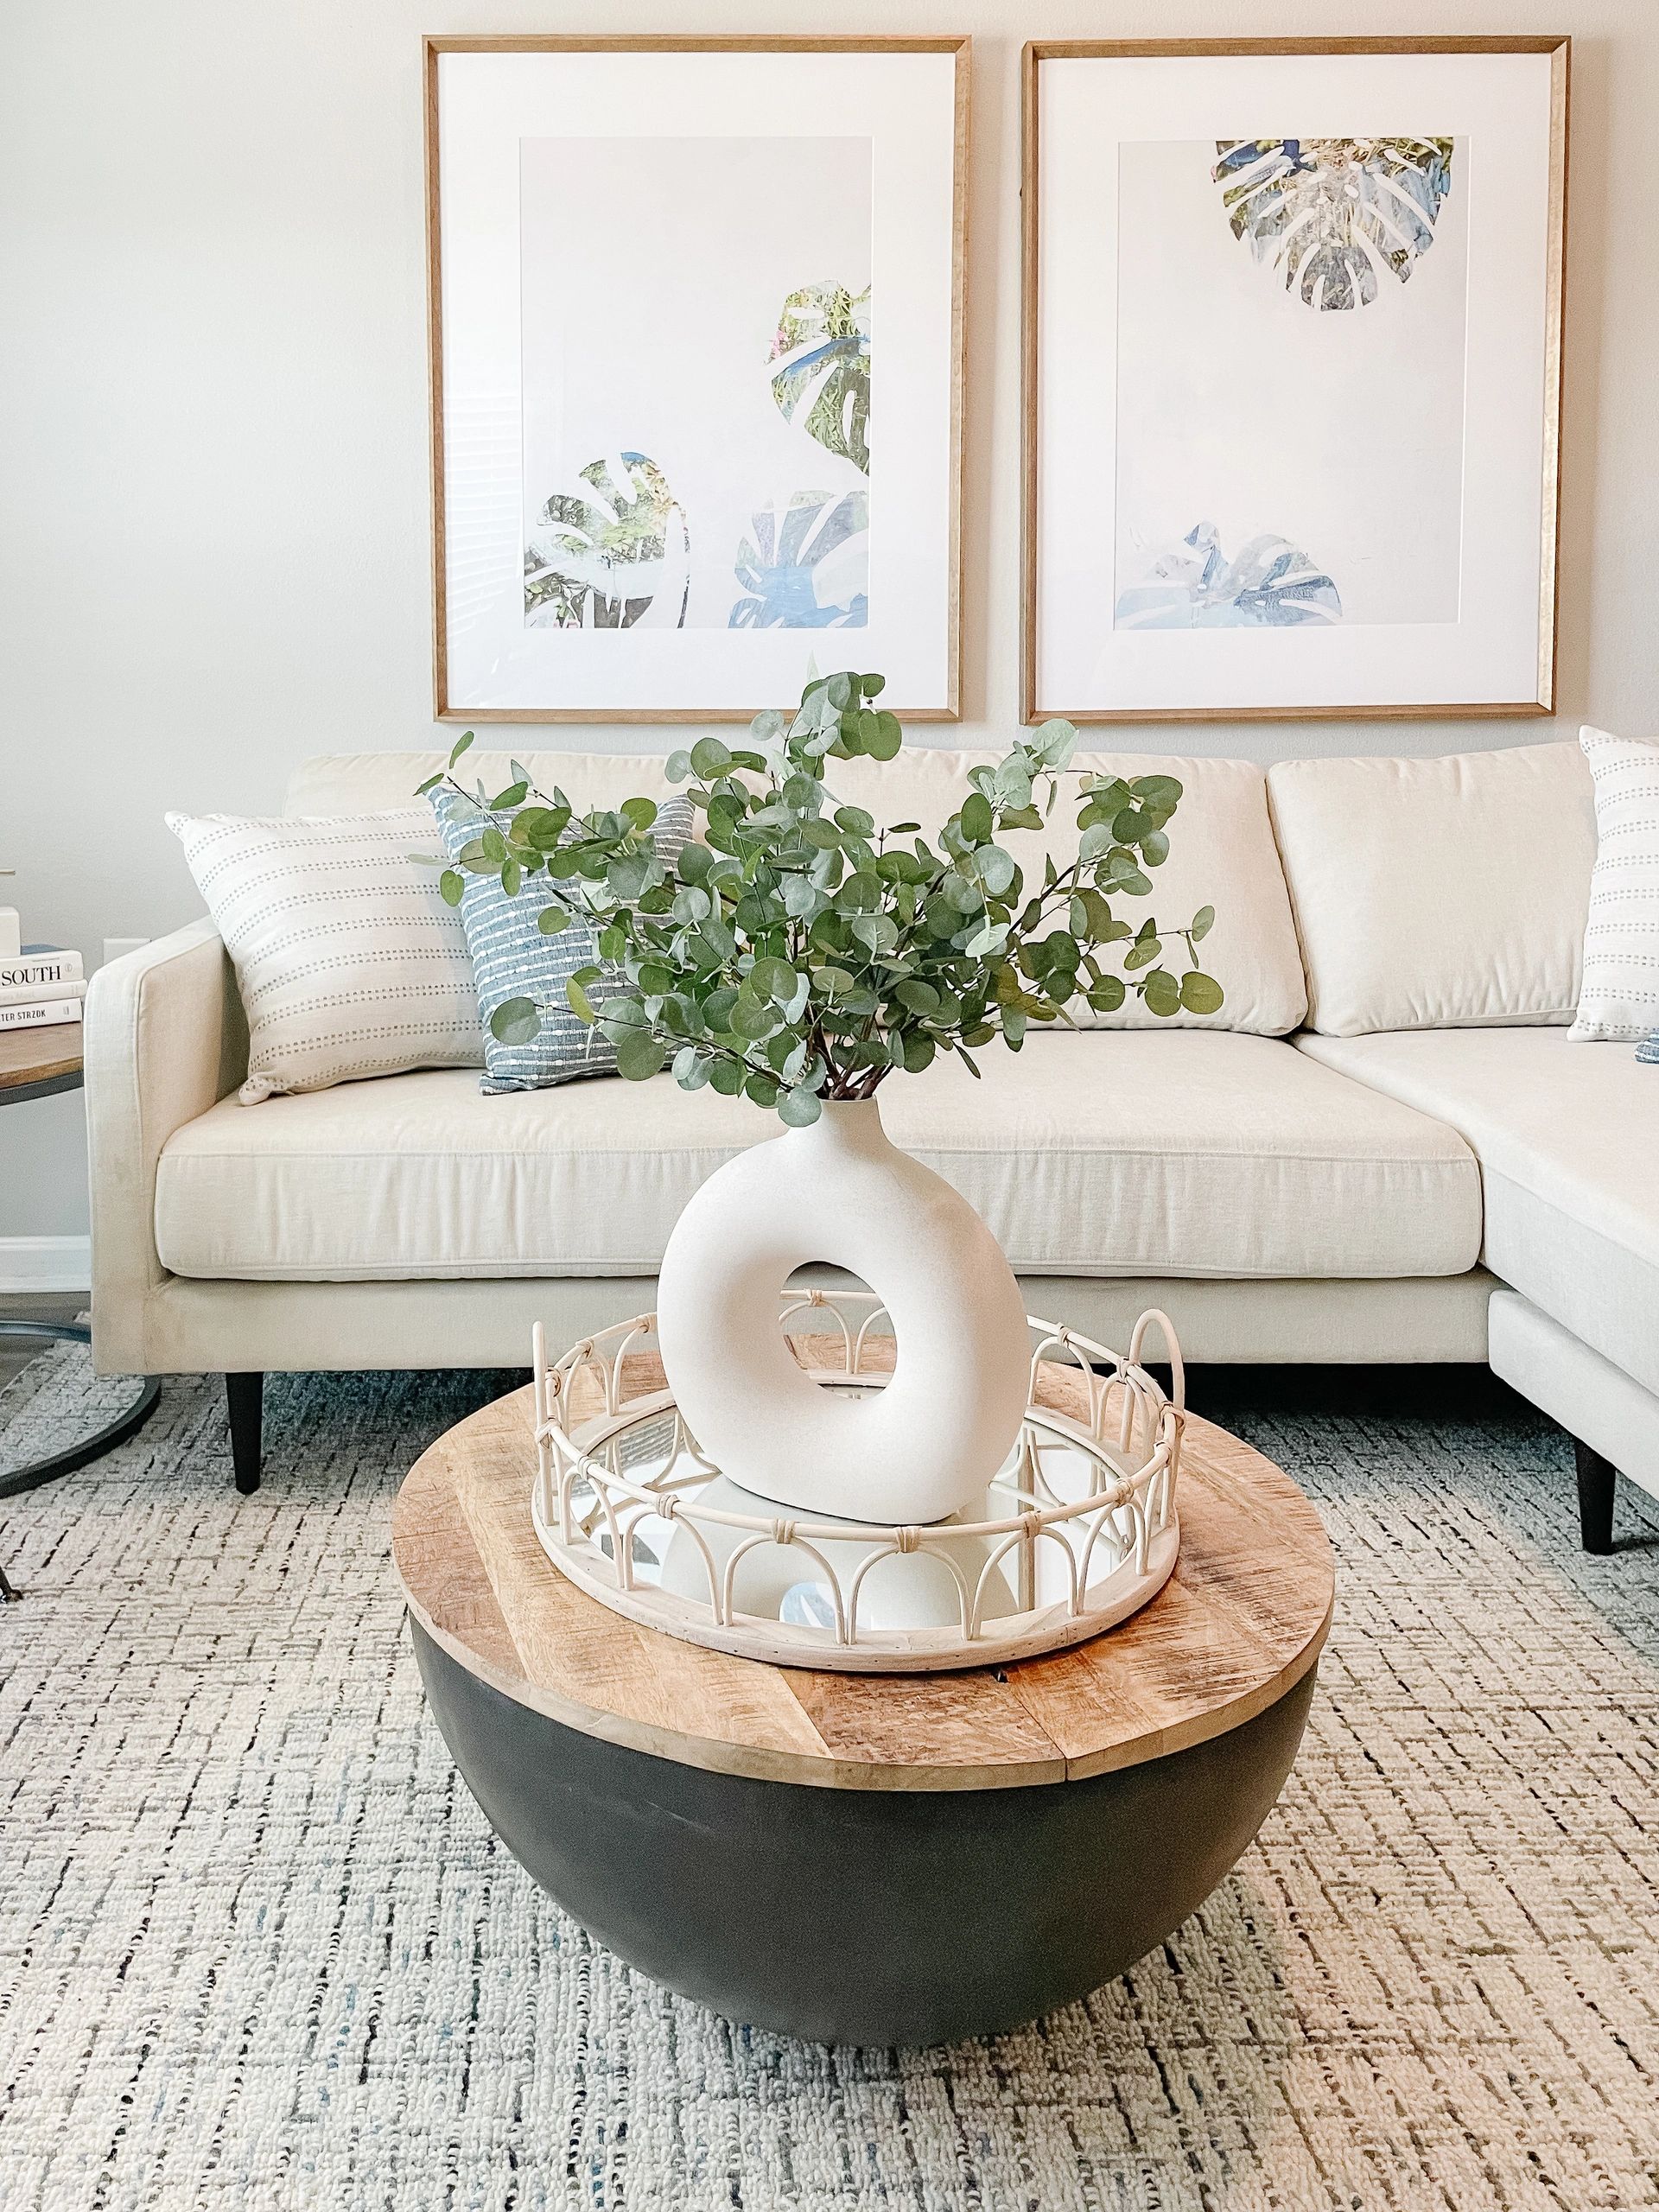 Multifamily interior designer Design by DuBois designed this living room in a model apartment. 